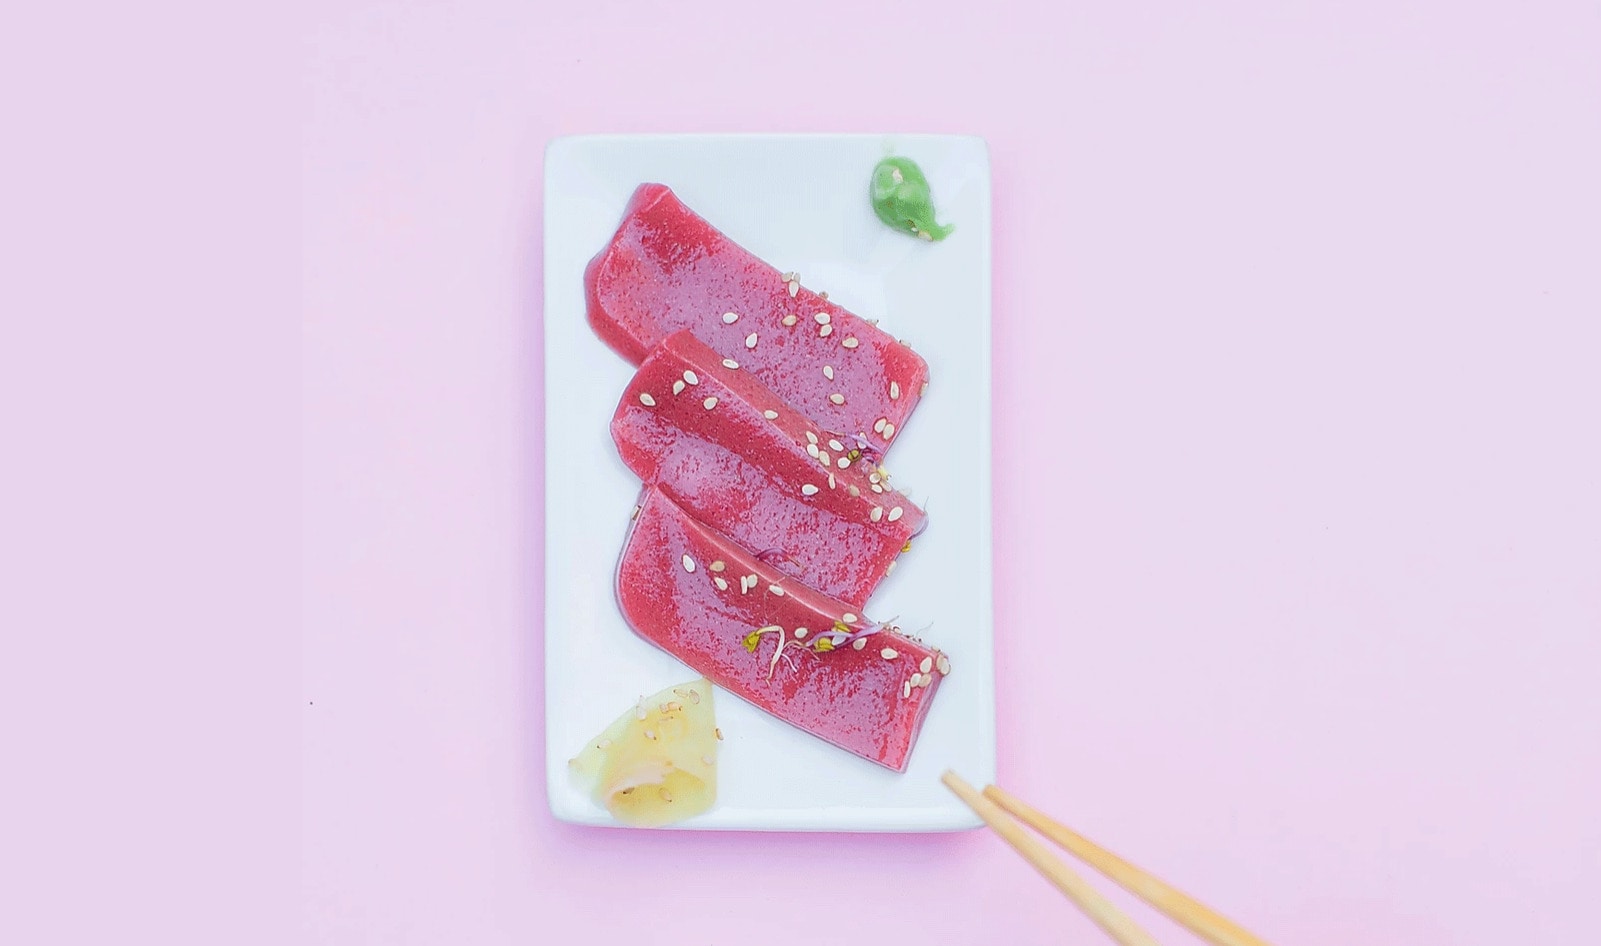 German Company Develops Next-Level Vegan Fish to “Get Tuna Off the Table”&nbsp;